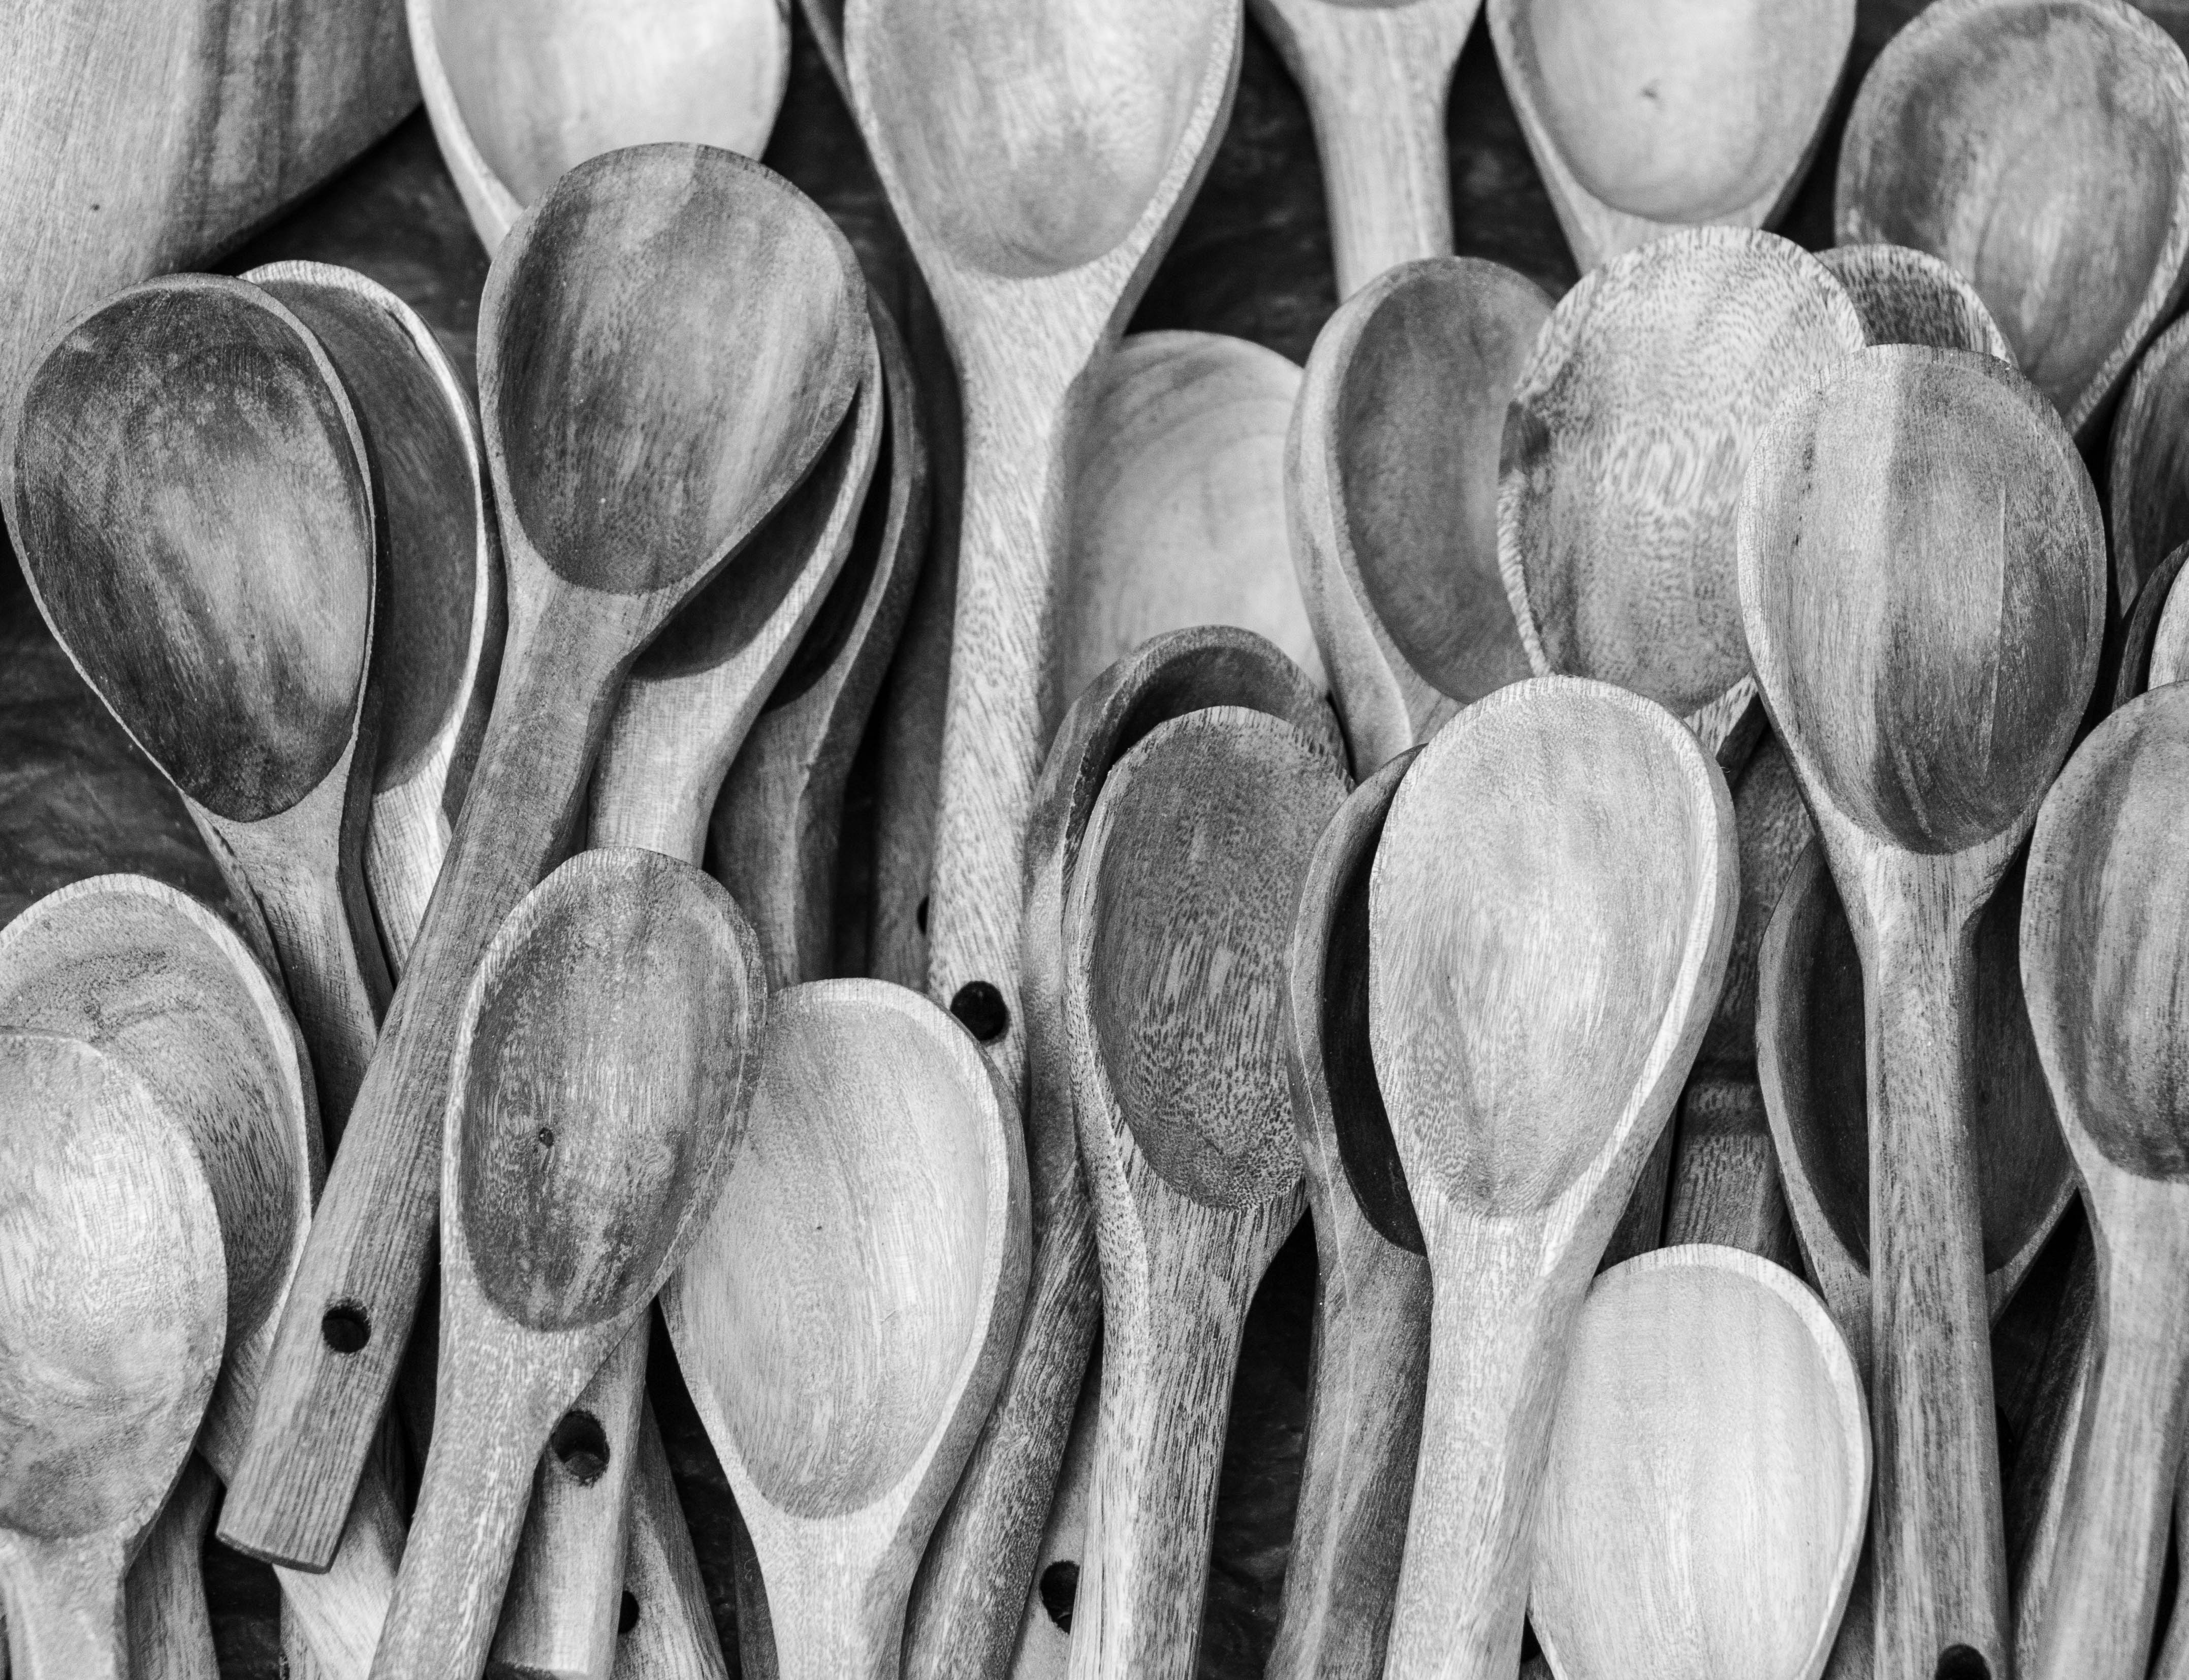 More wooden. Wooden Spoon jpg. Spoon Barrel.